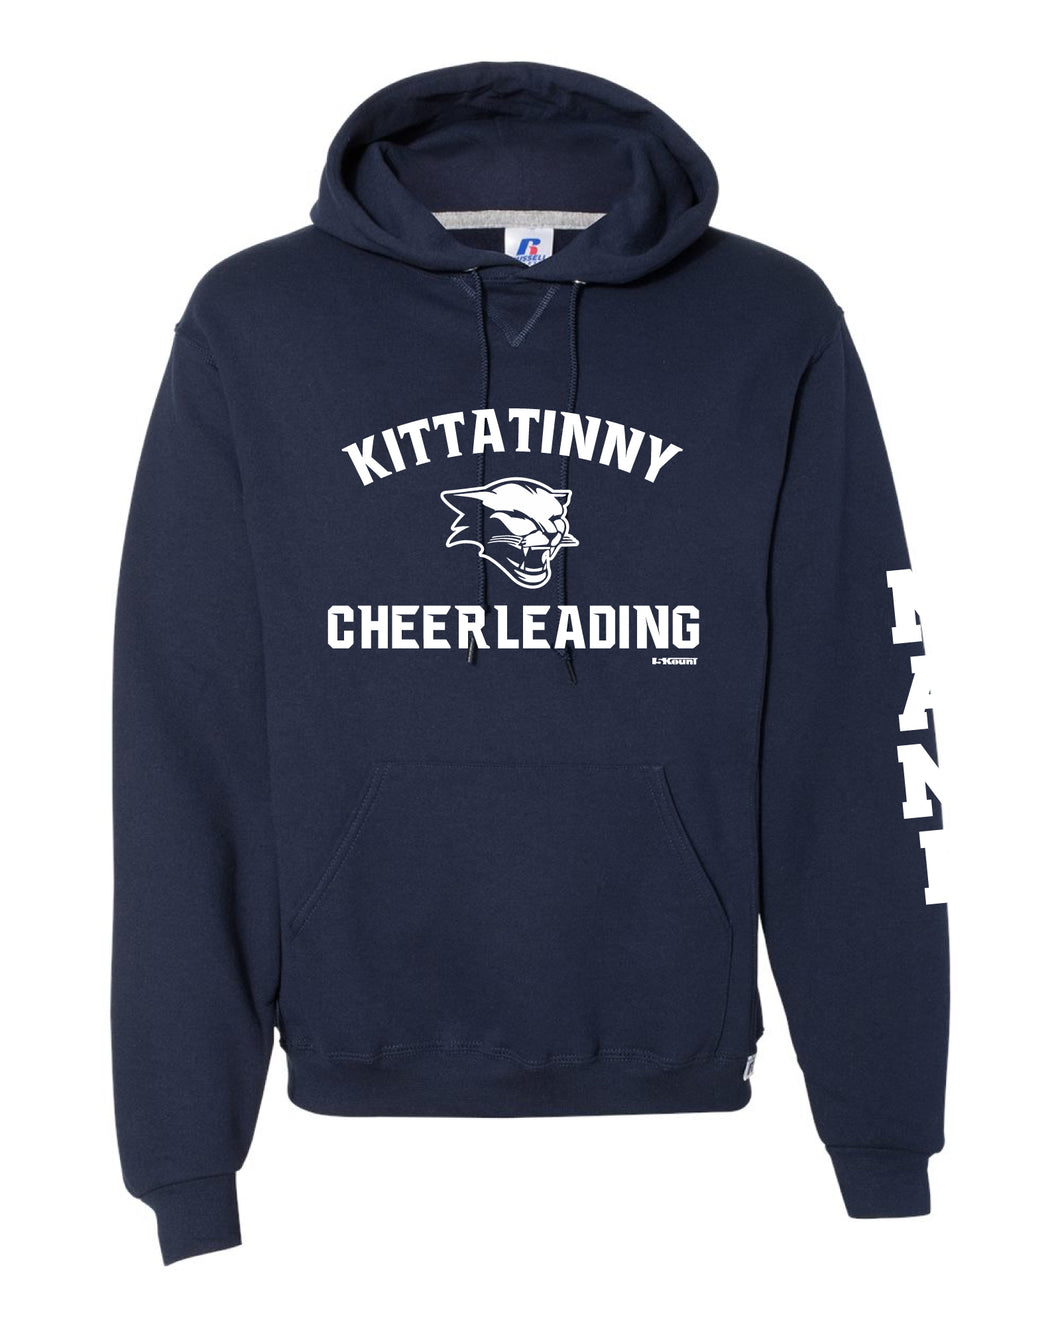 Kittatinny Cheer Russell Athletic Cotton Hoodie - Navy - 5KounT2018